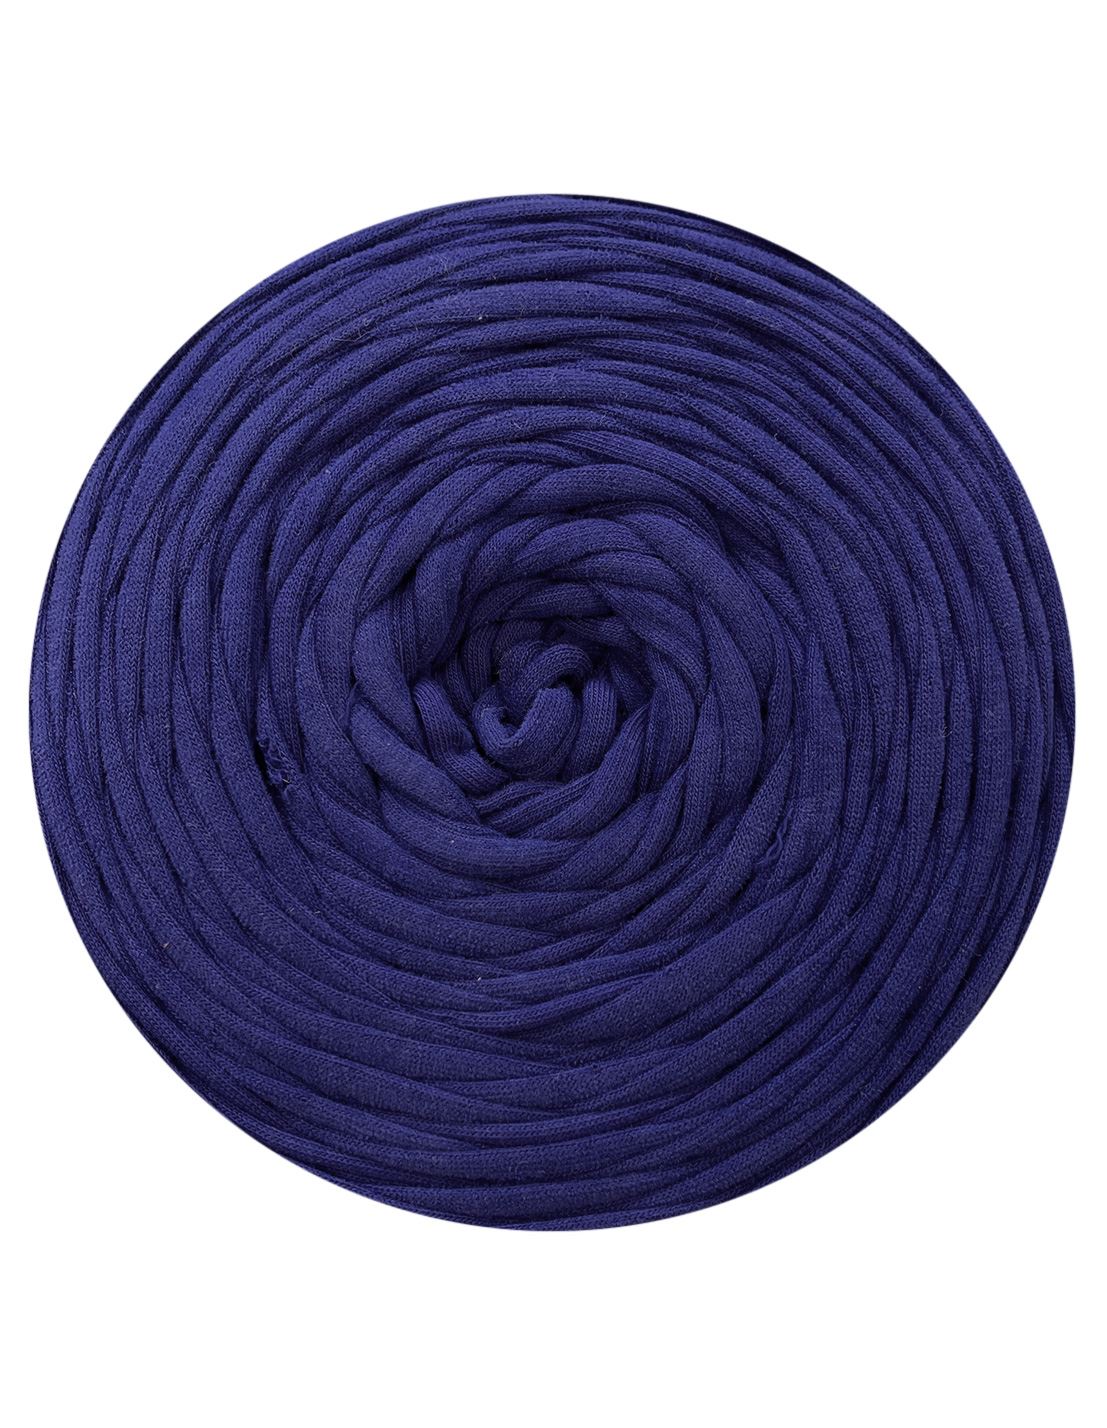 Bright berry blue t-shirt yarn (100-120m)